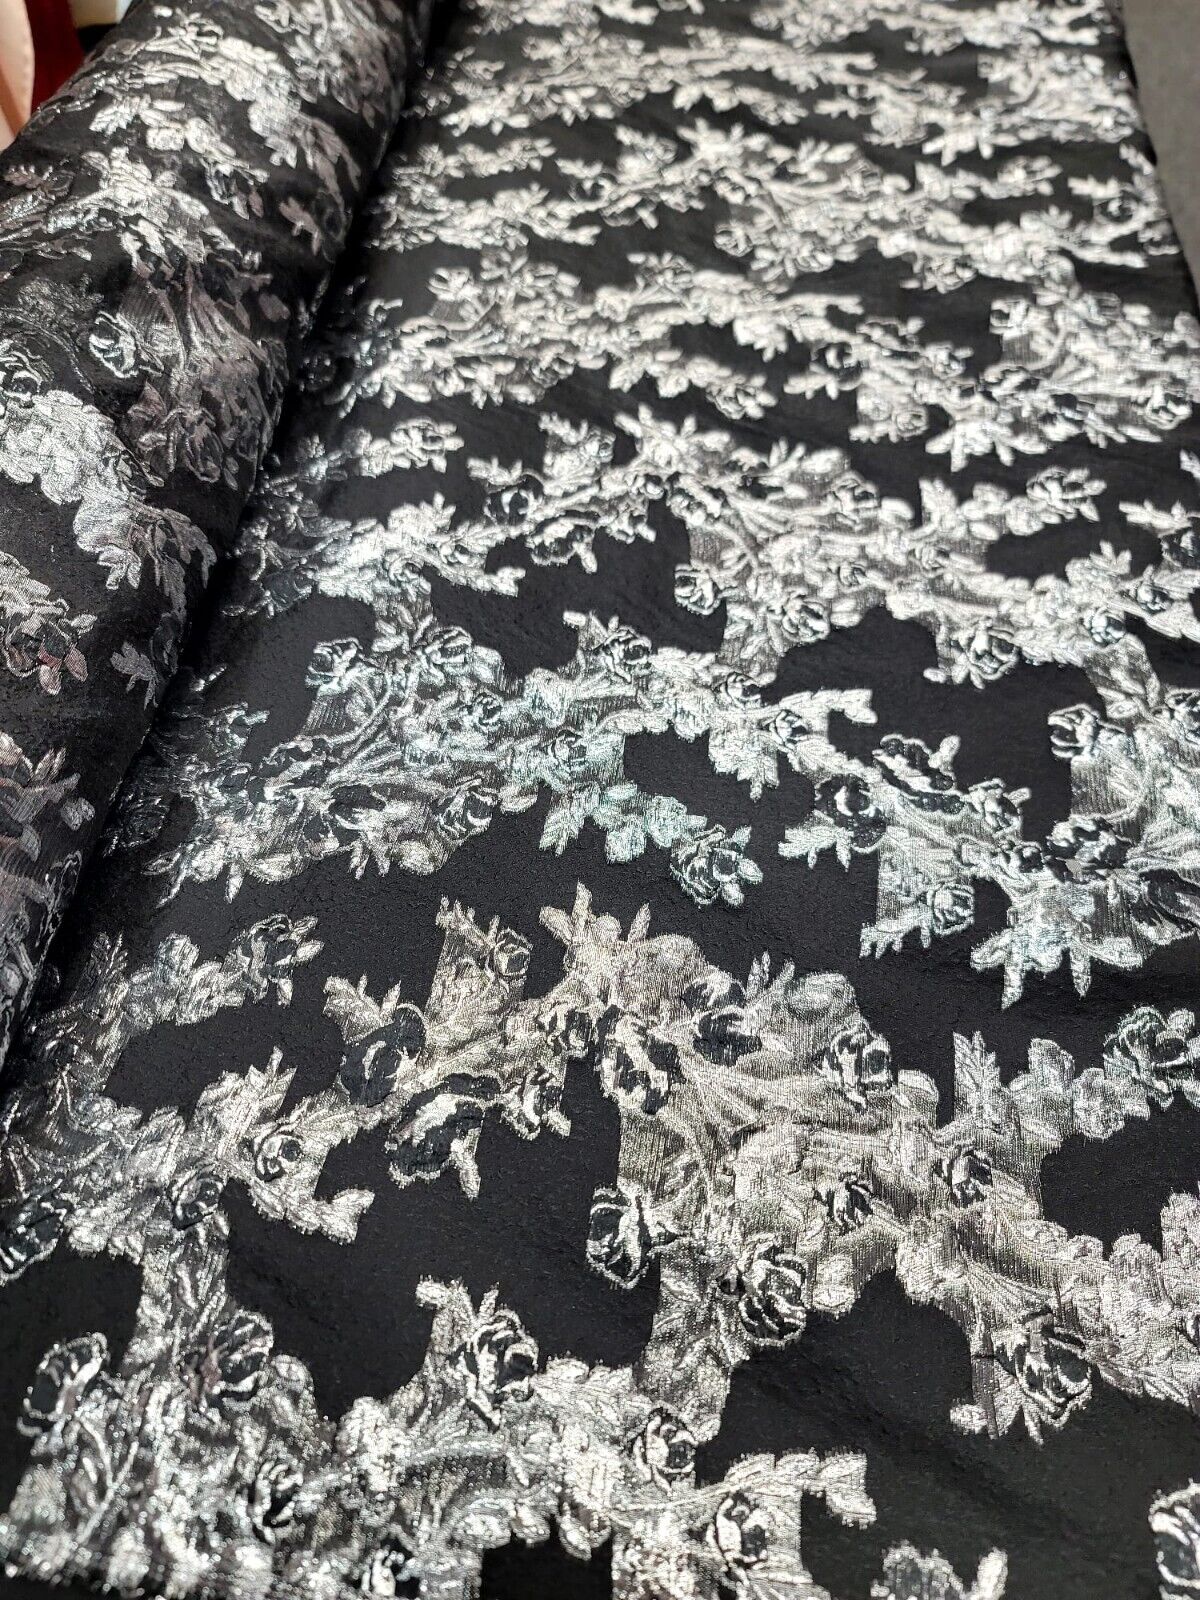 Black Organza Brocade Silver Floral Fabric Sold by the Yard Gown Quinceañera